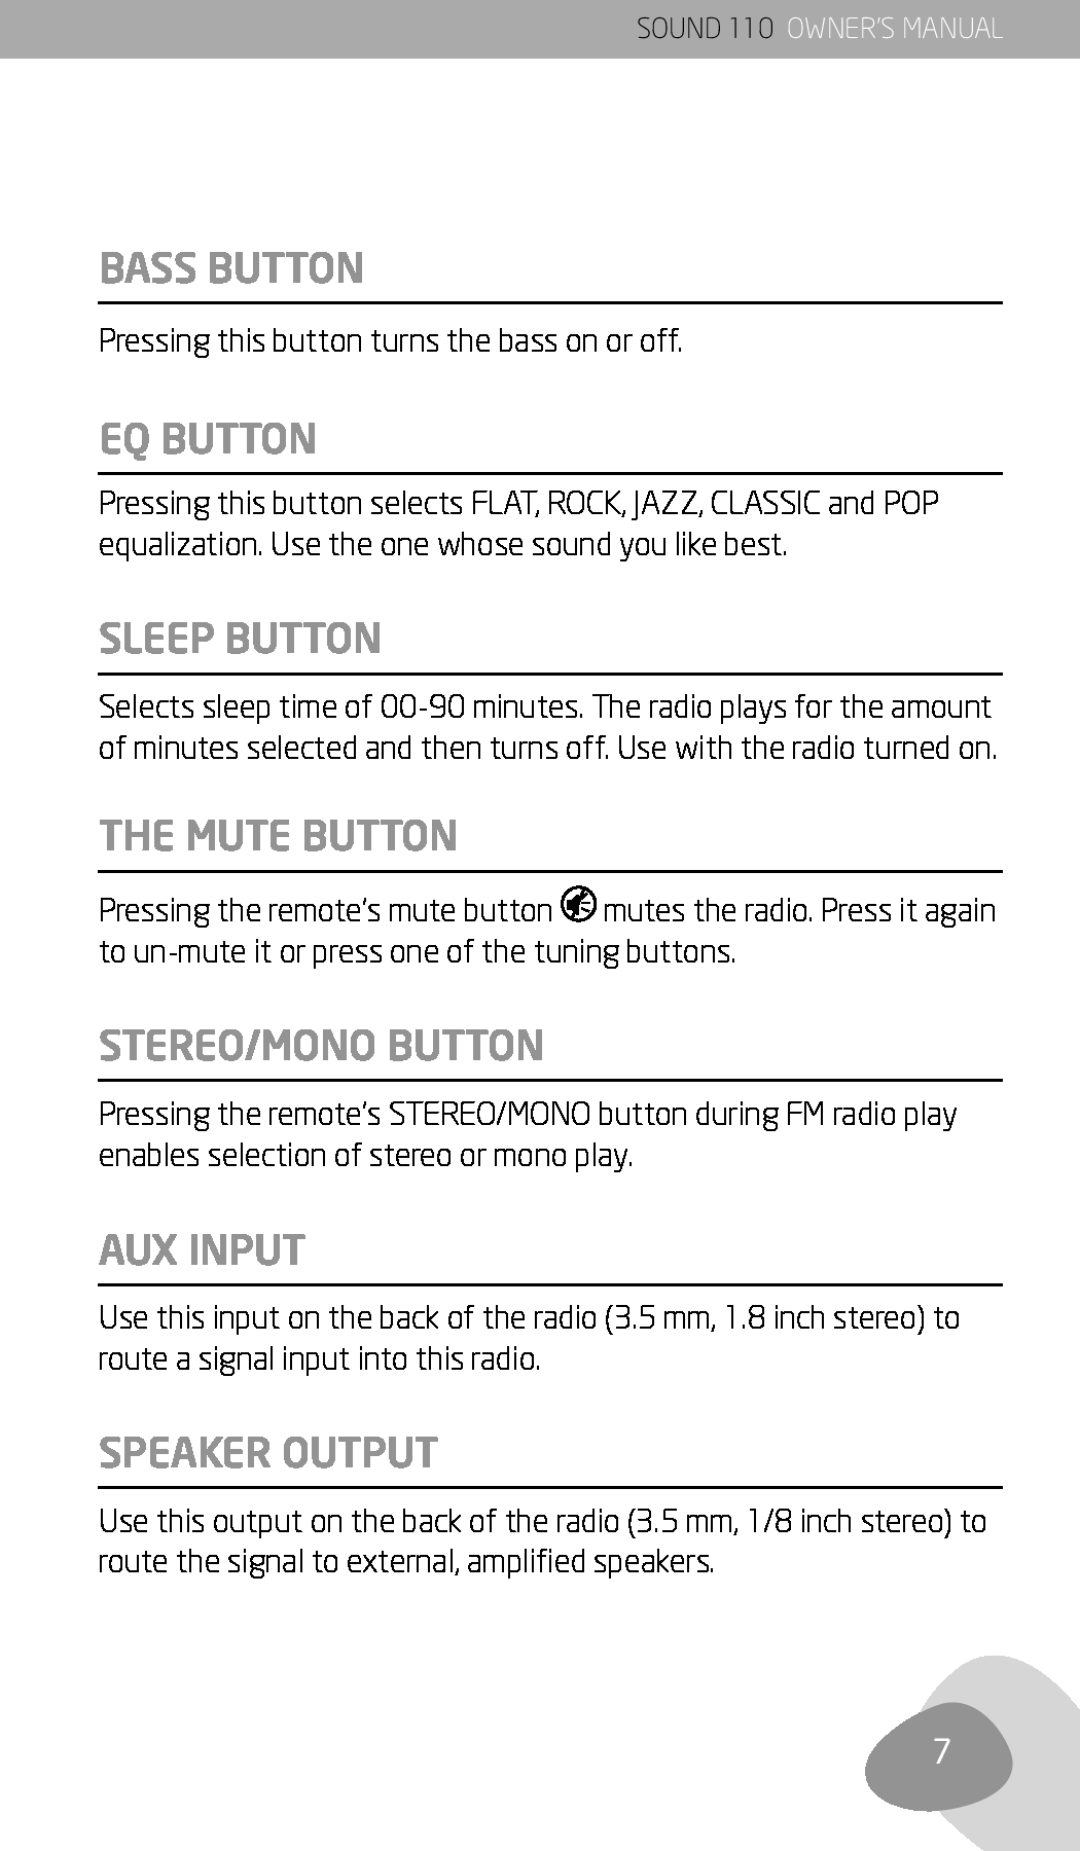 Eton 110 owner manual Bass Button, Eq Button, Sleep Button, The Mute Button, Stereo/Mono Button, Aux Input, Speaker Output 